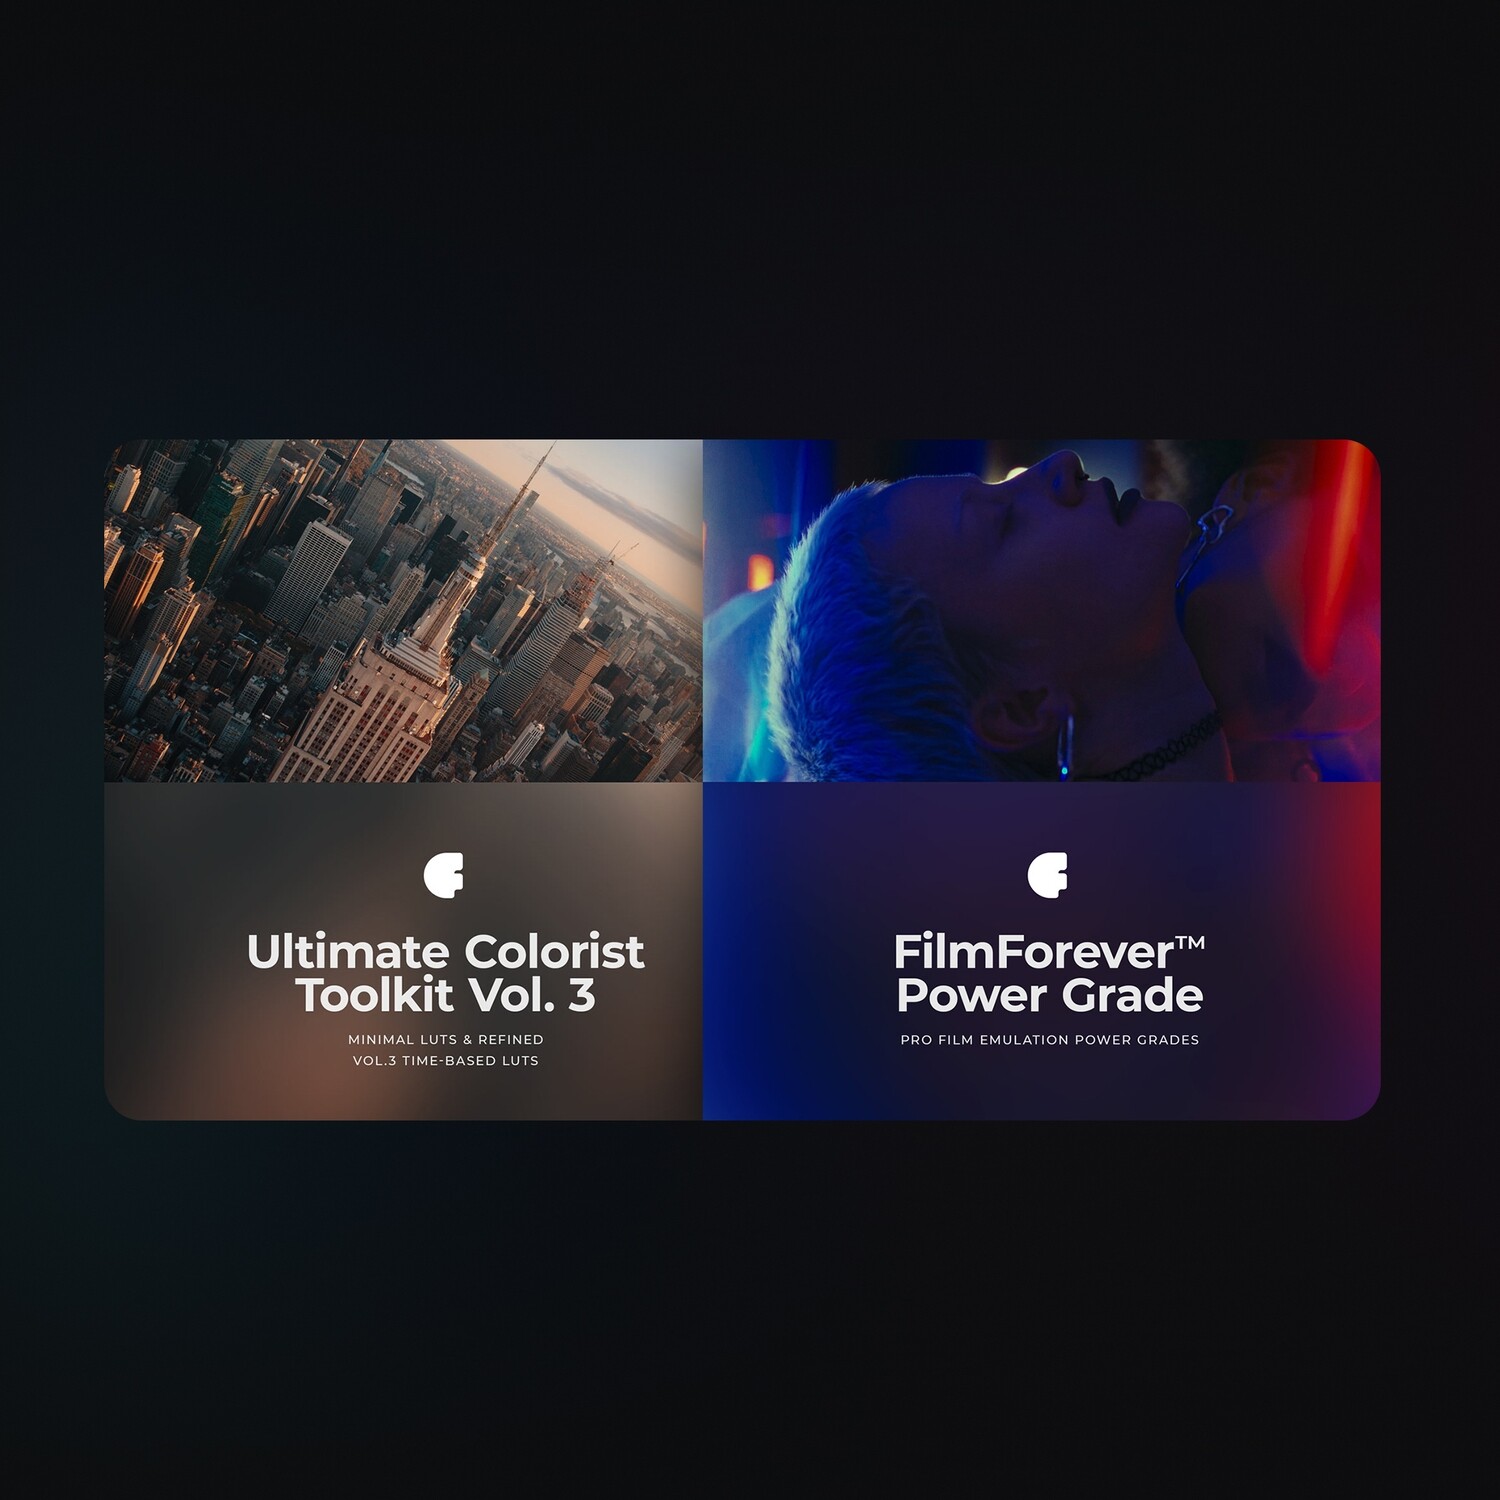 FilmForever™ & Ultimate Colorist Toolkit, Vol. 3 (2022)